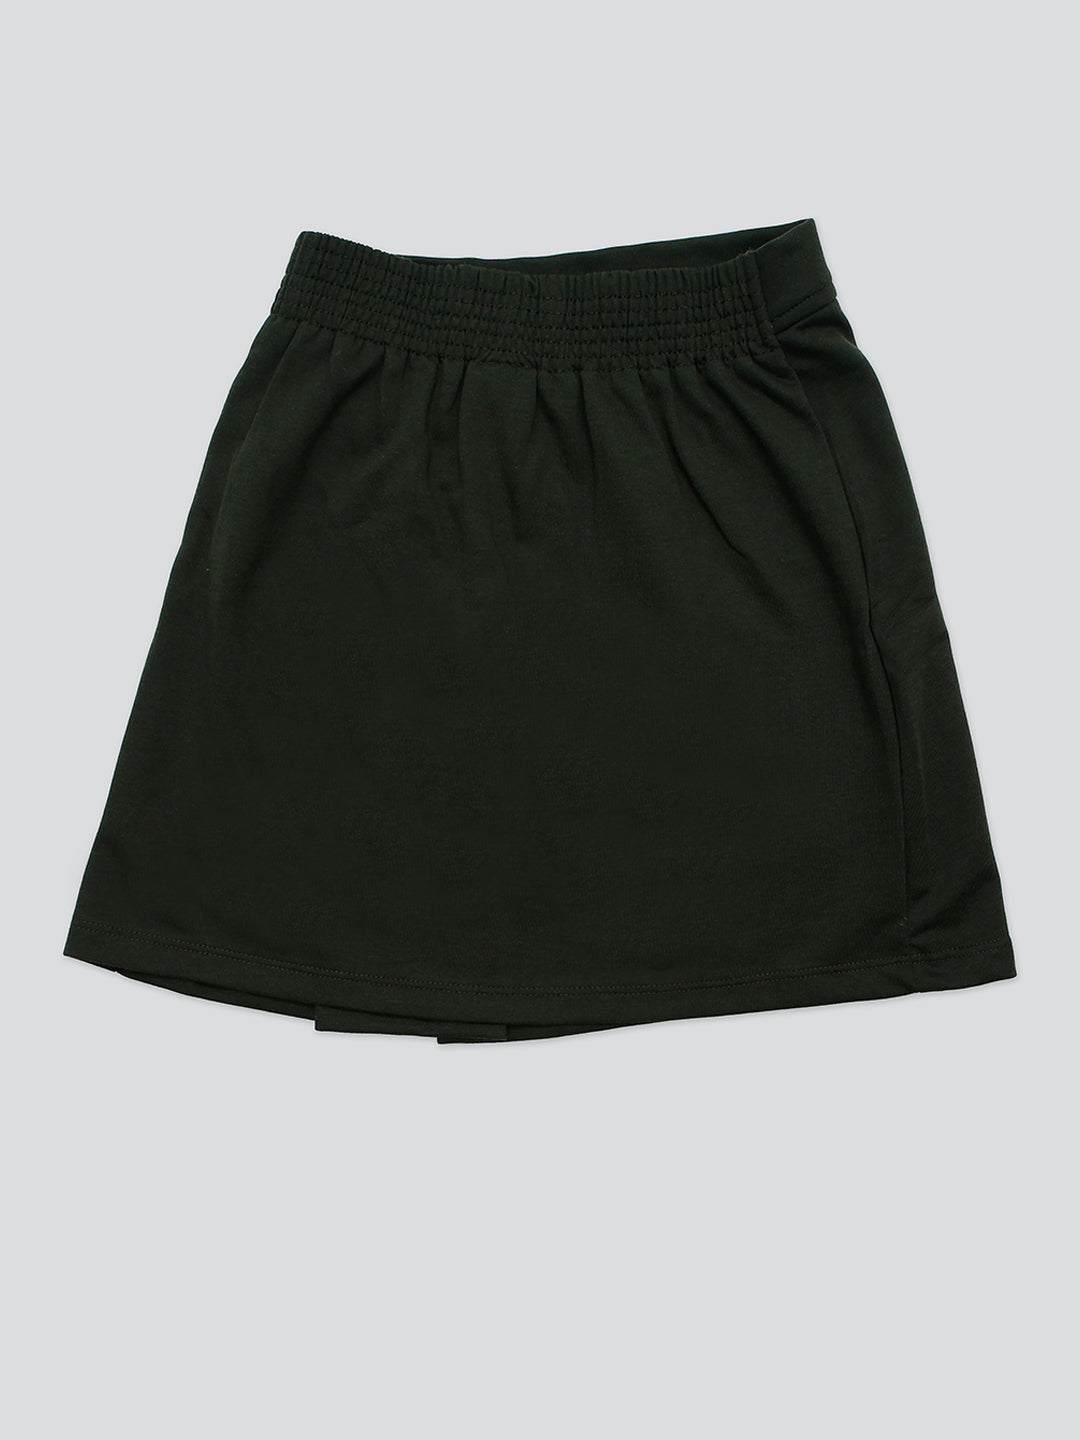 Pampolina Girls Solid Skirt- Olive